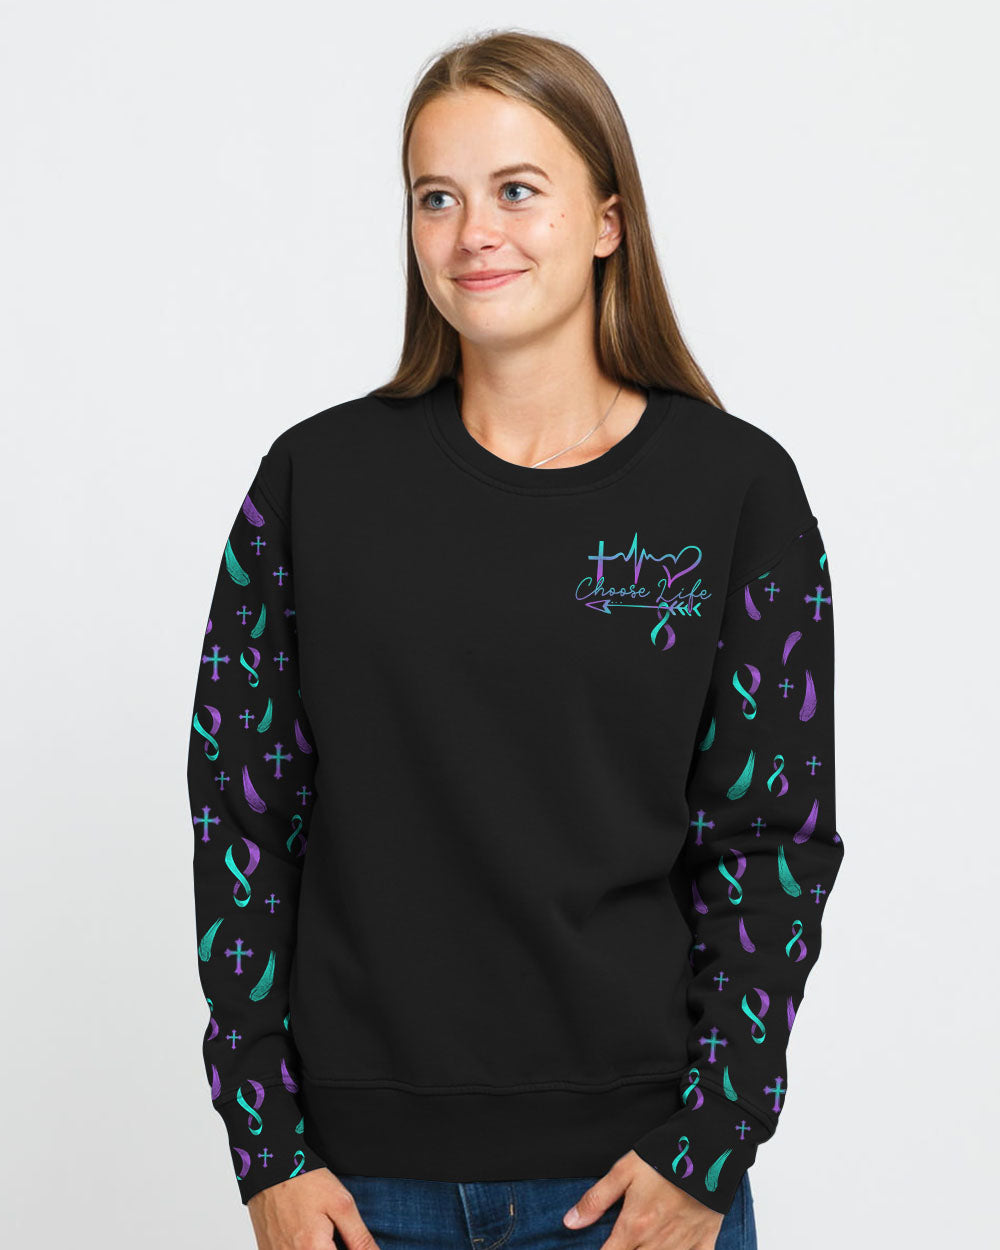 Choose Life Sunflower Women's Suicide Prevention Awareness Sweatshirt